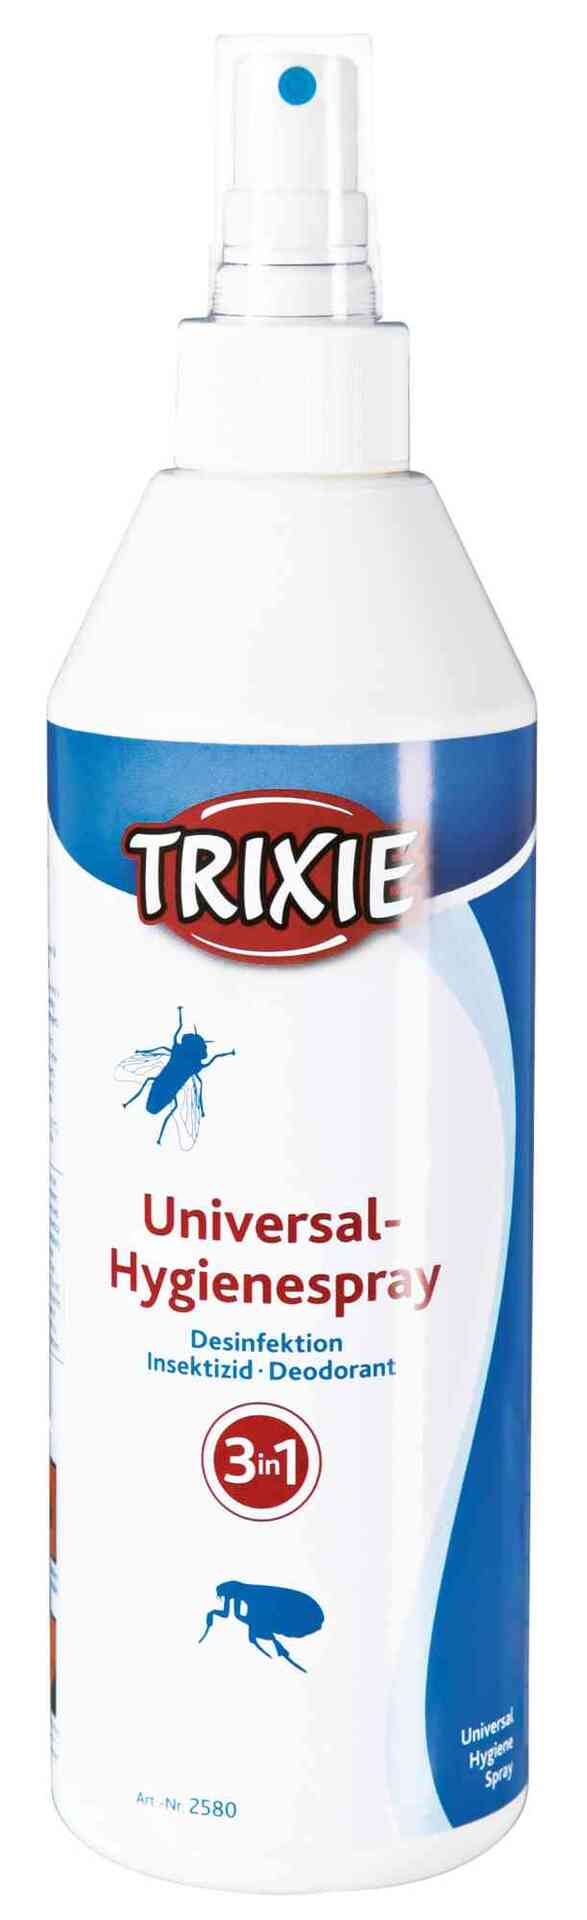 TRIXIE Universal-Hygienespray 500 ml